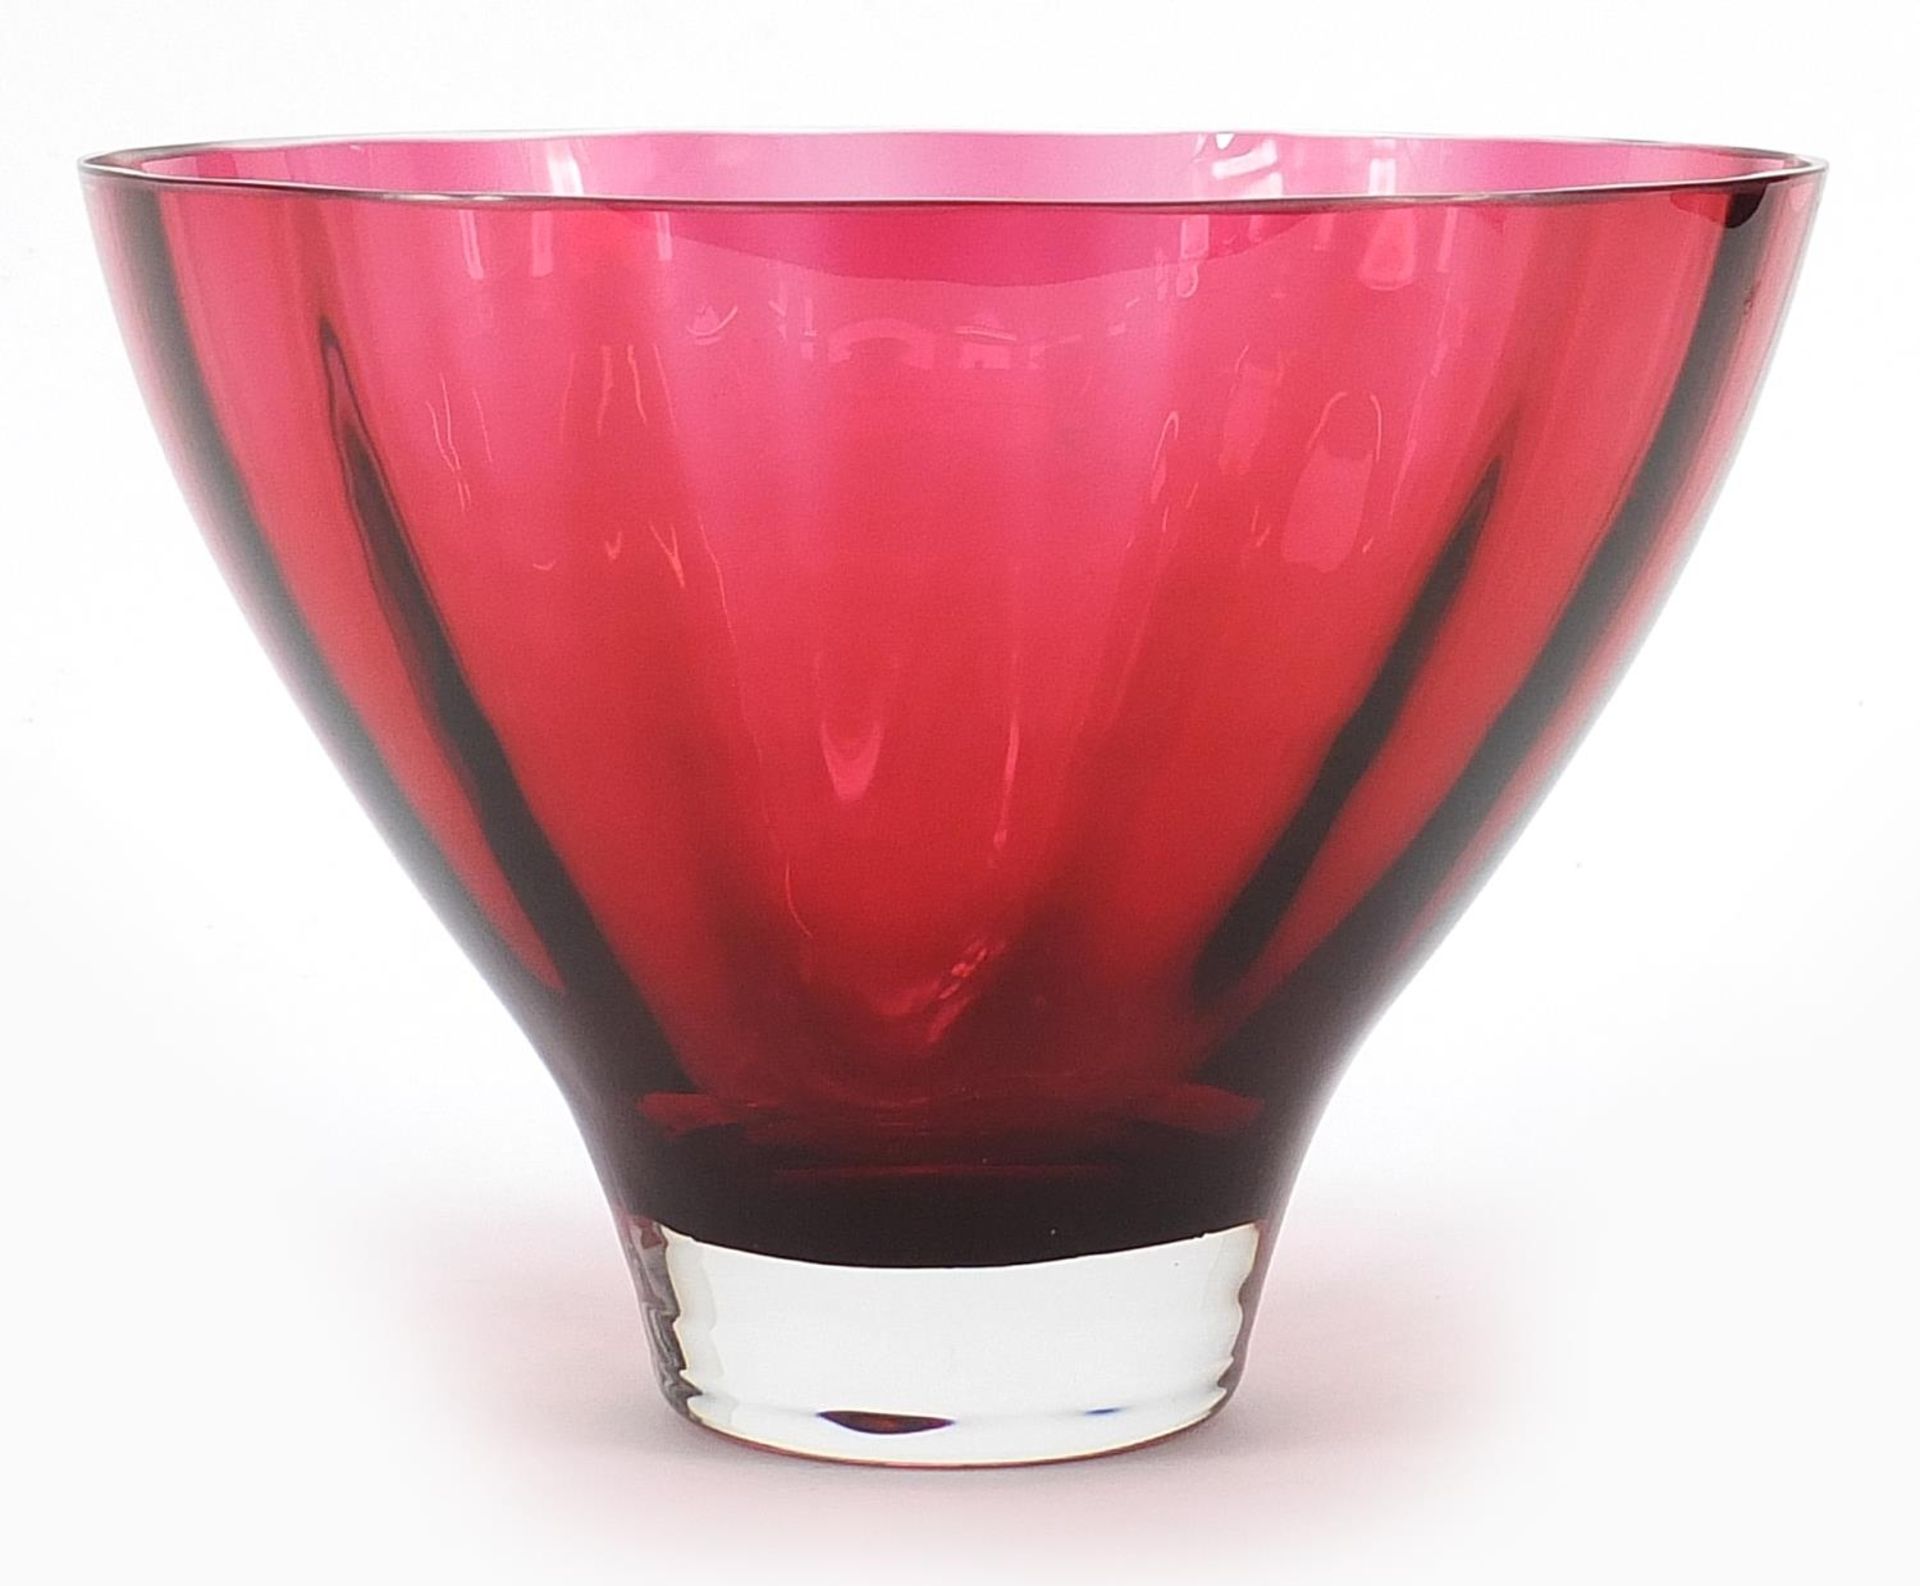 Dartington Crystal ruby glass bowl, 17cm high x 23.5cm in diameter